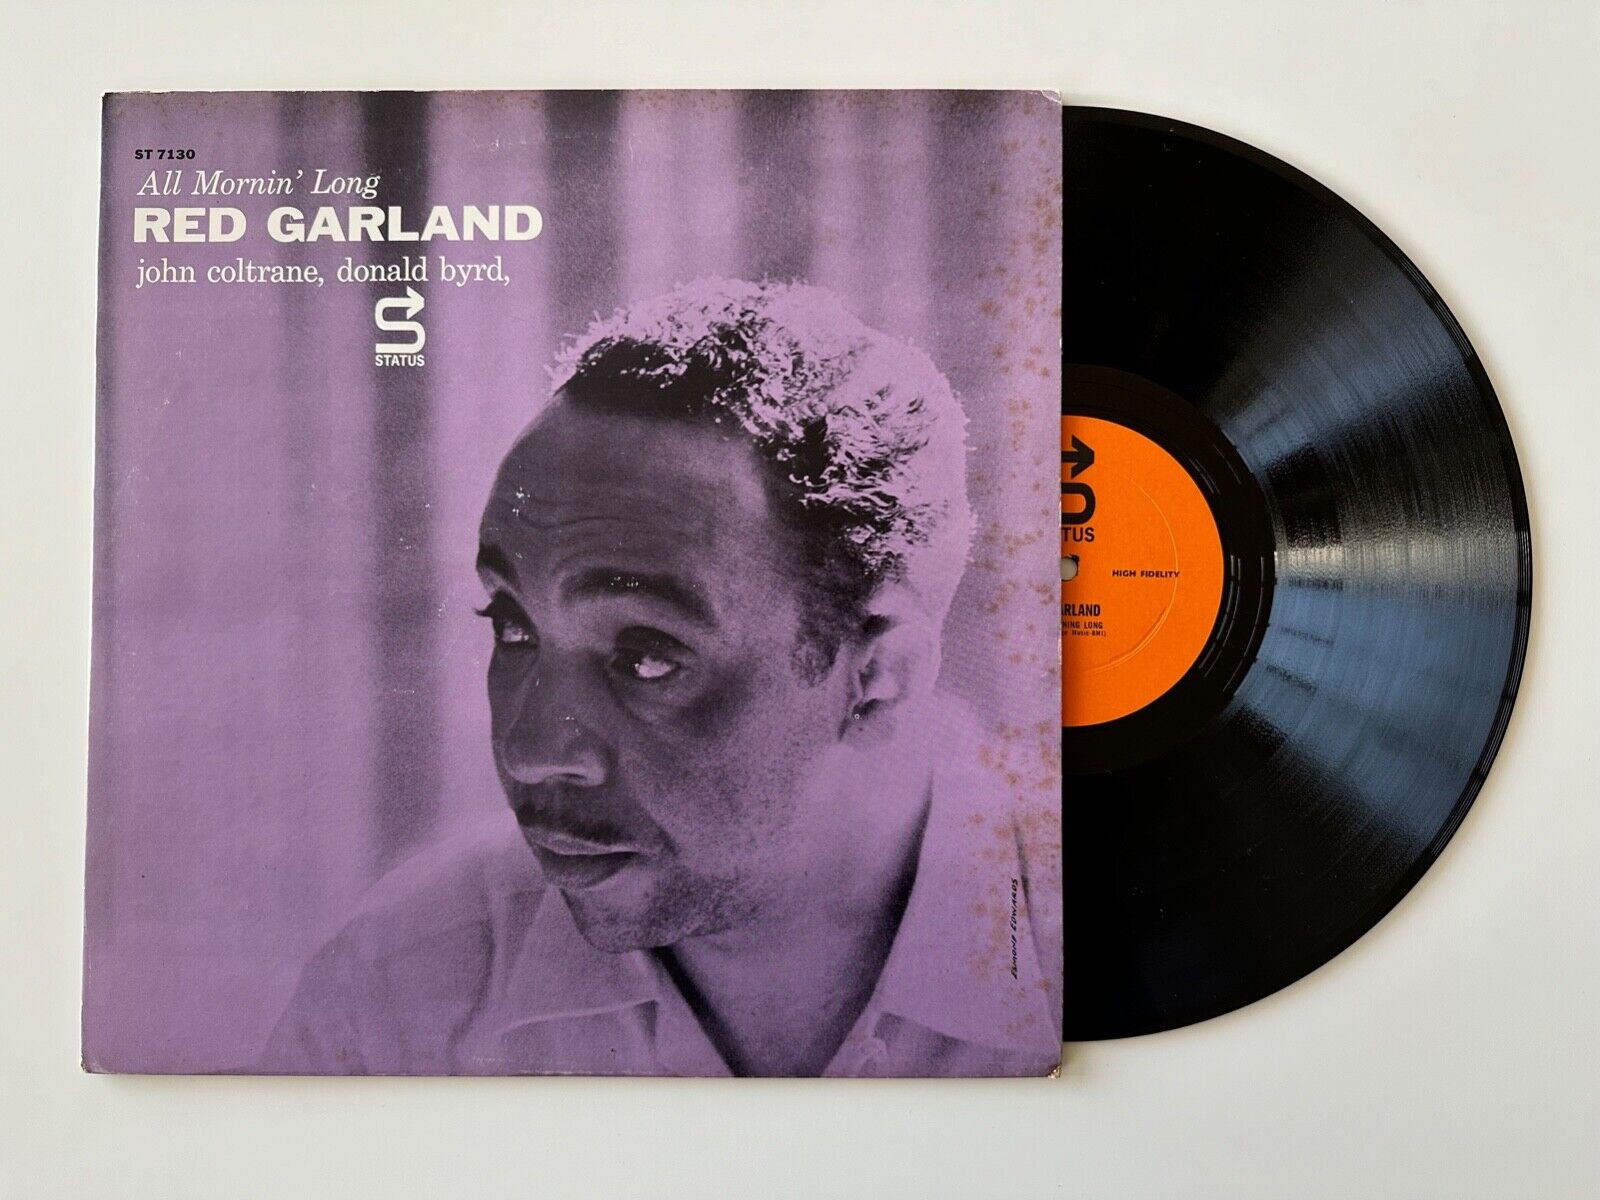 RED GARLAND - ALL MORNIN' LONG - MONO VINYL LP - 1965 PRESS - COLTRANE - ST-7130